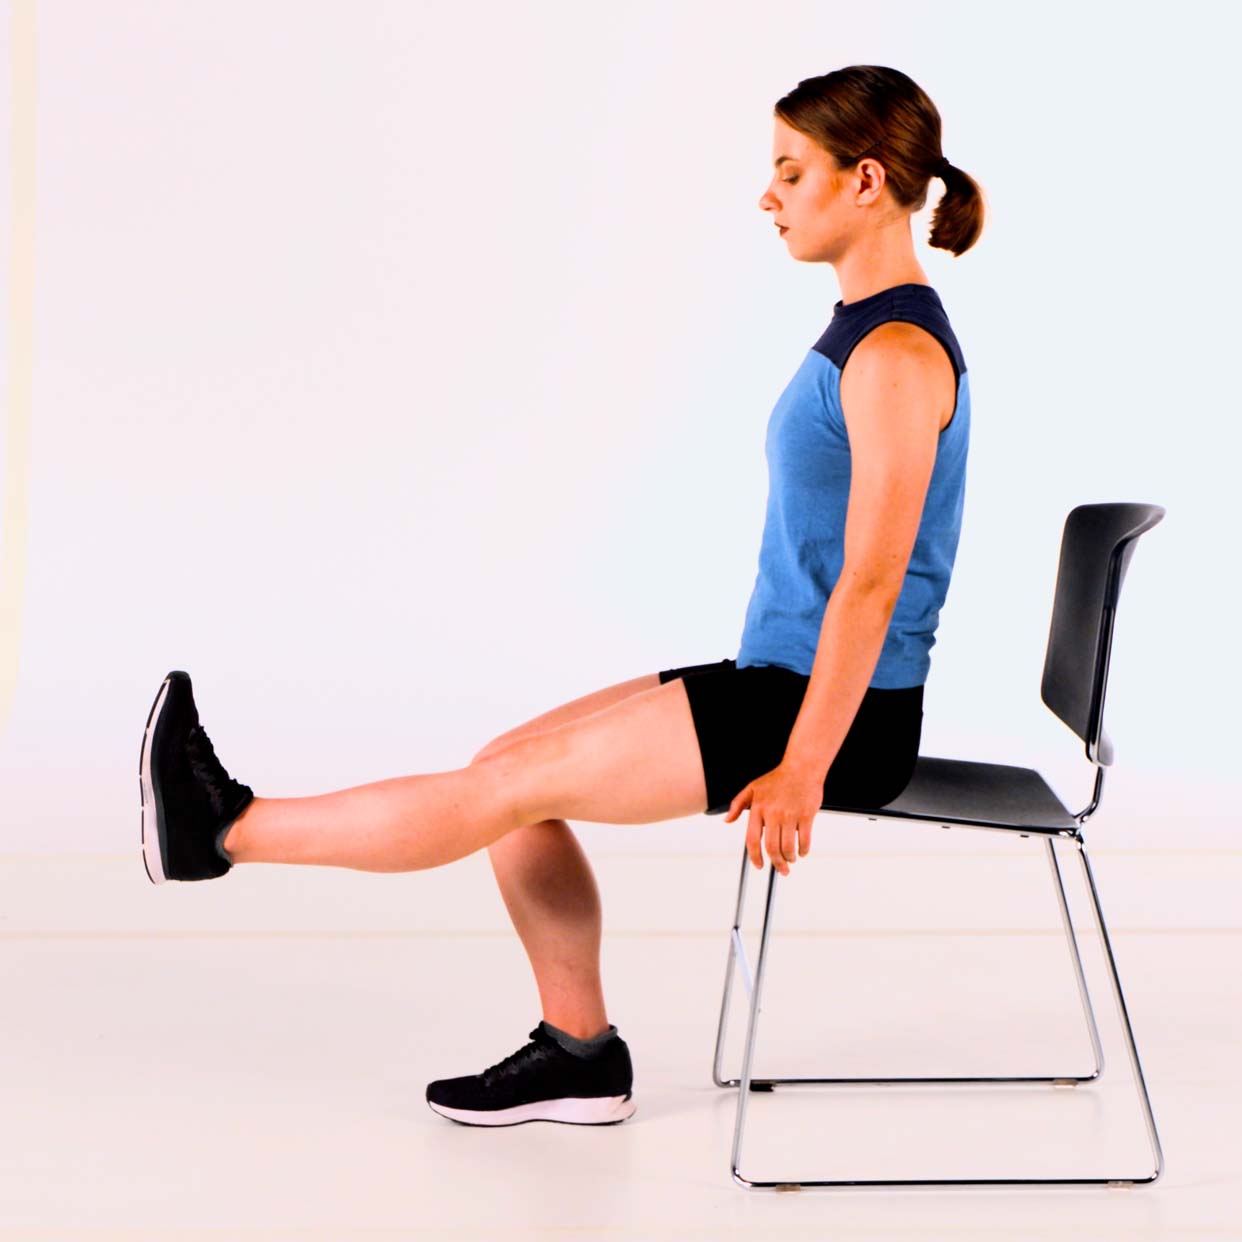 A person is doing leg flexion/extension exercises